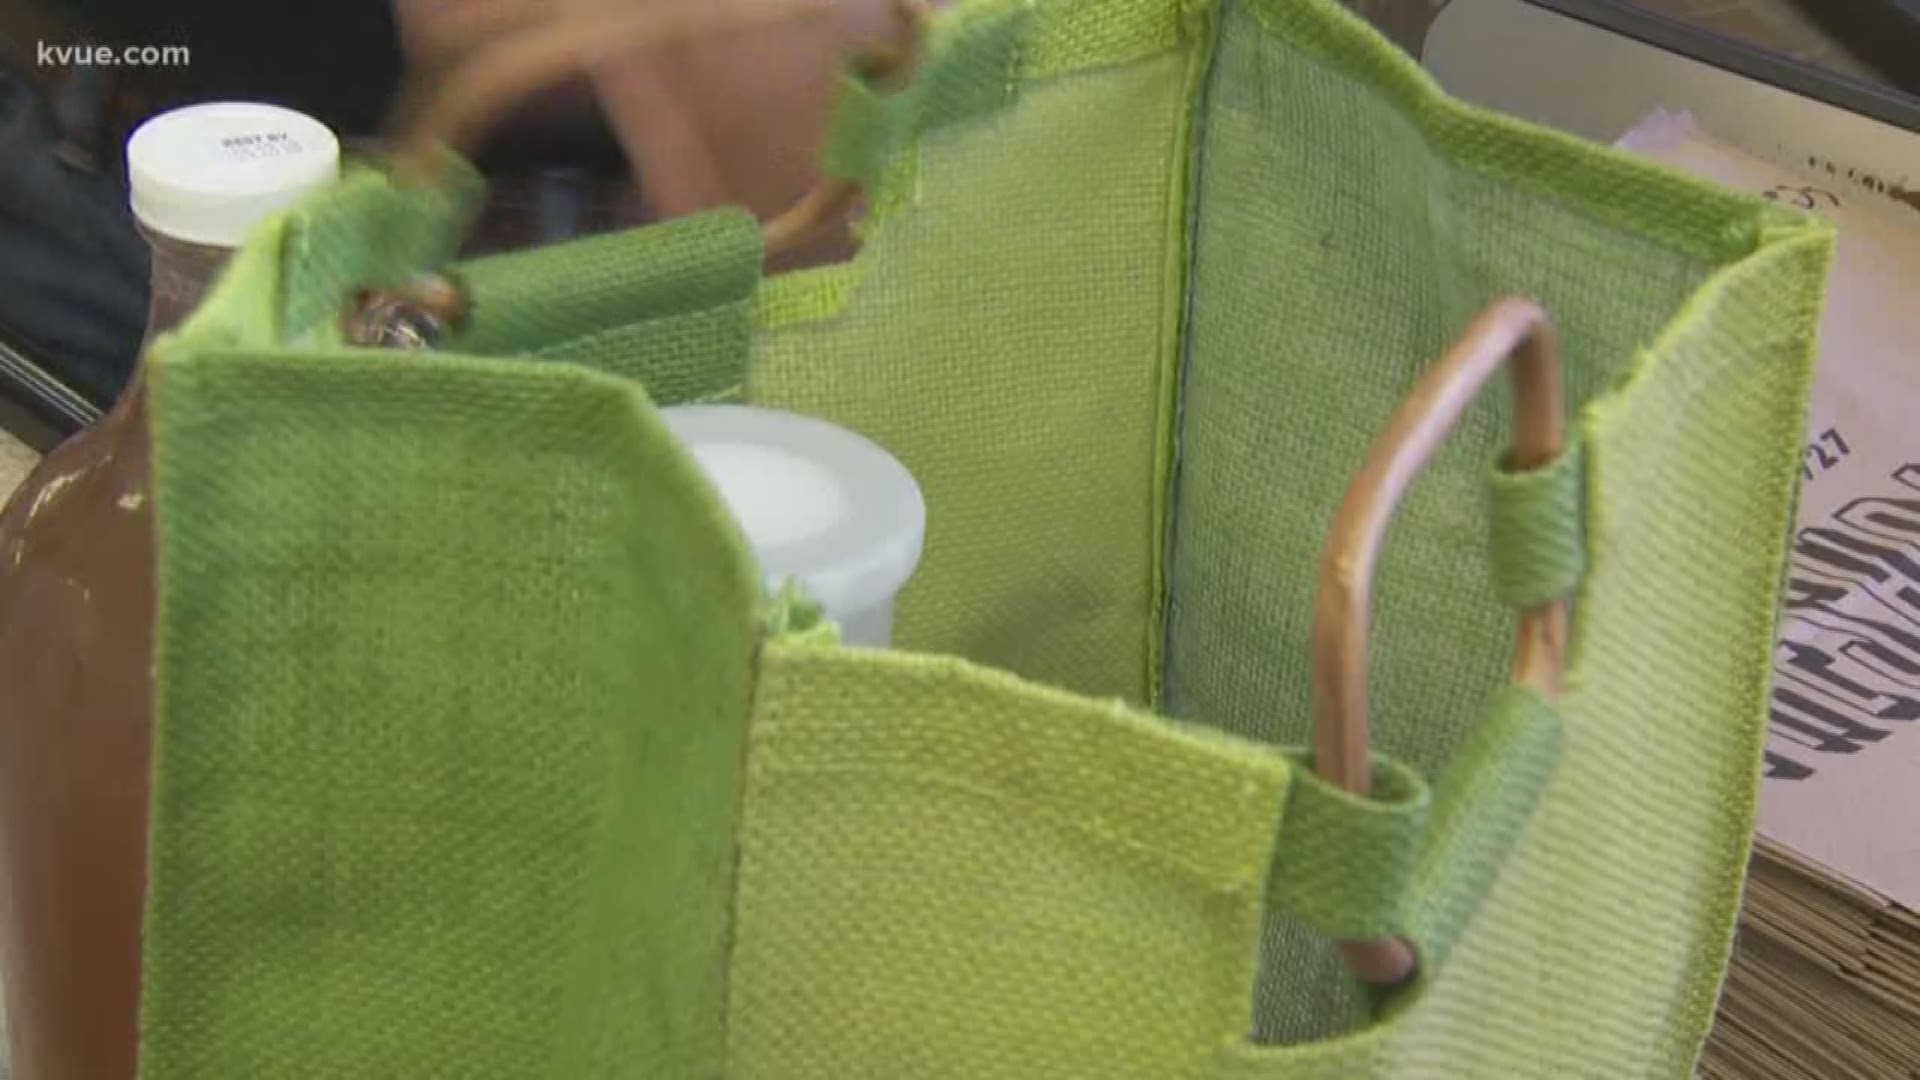 Ban on plastic bags in Laredo struck down